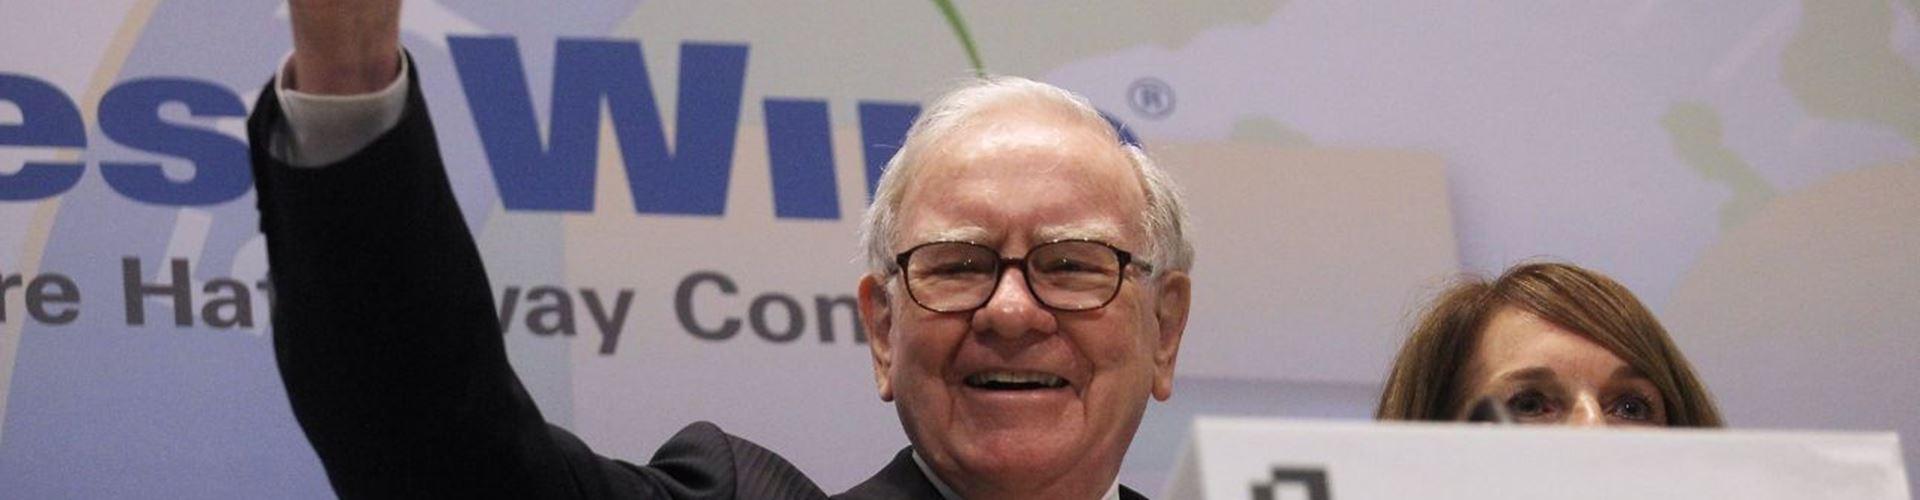 Warren Buffett’s Berkshire Hathaway stock price exceeds $200,000 per share